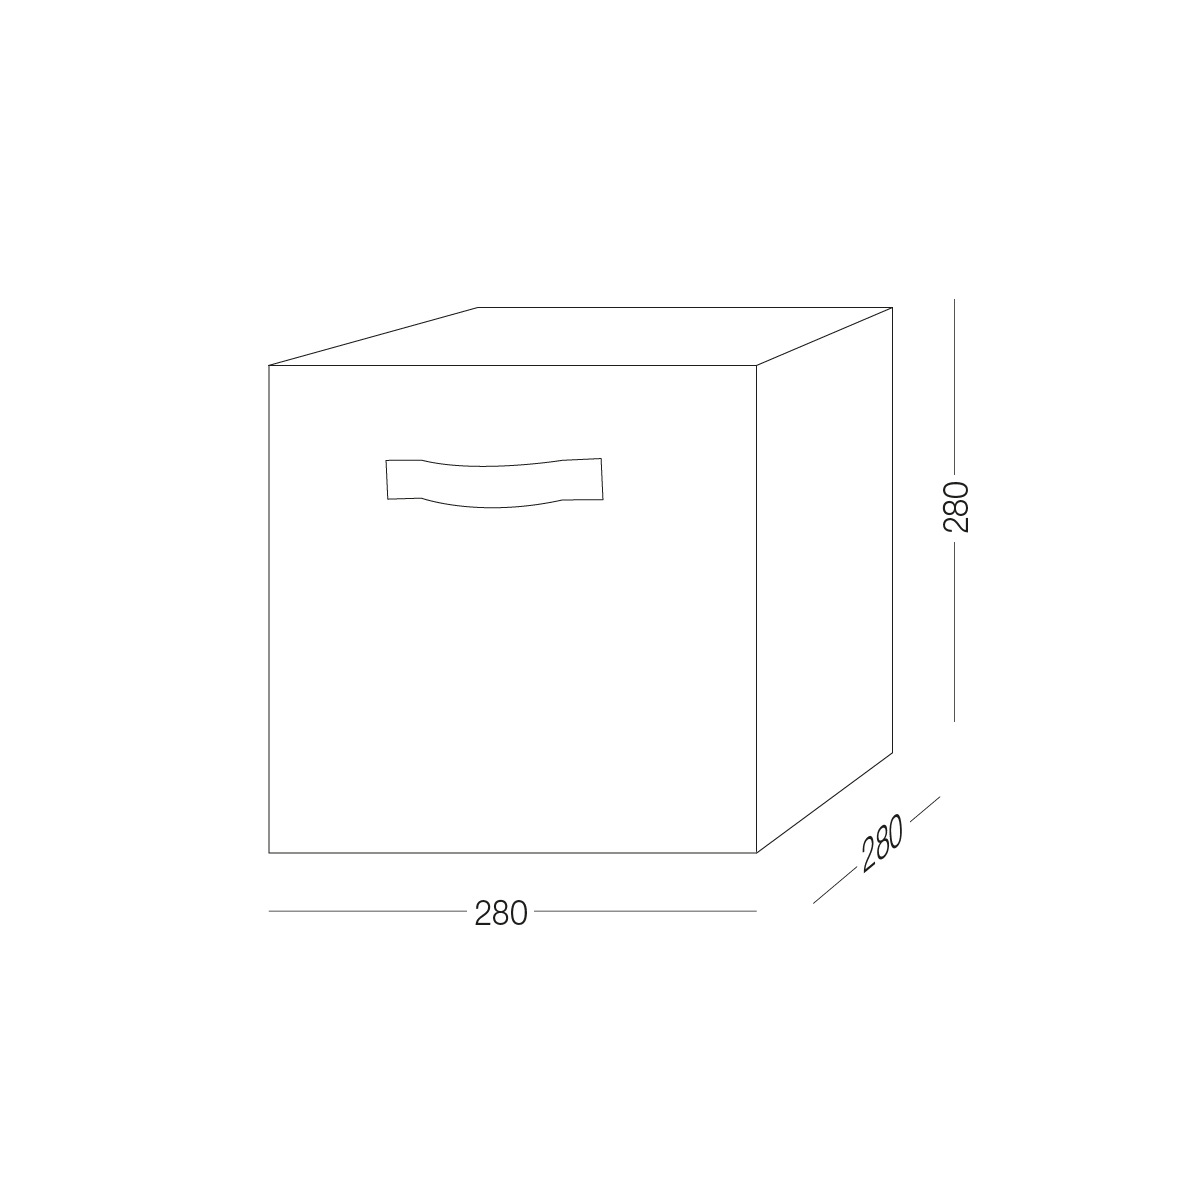 Ящик для хранения МВМ My Home 28x28х28 см кремовый (TH-08CREAM) - фото 3